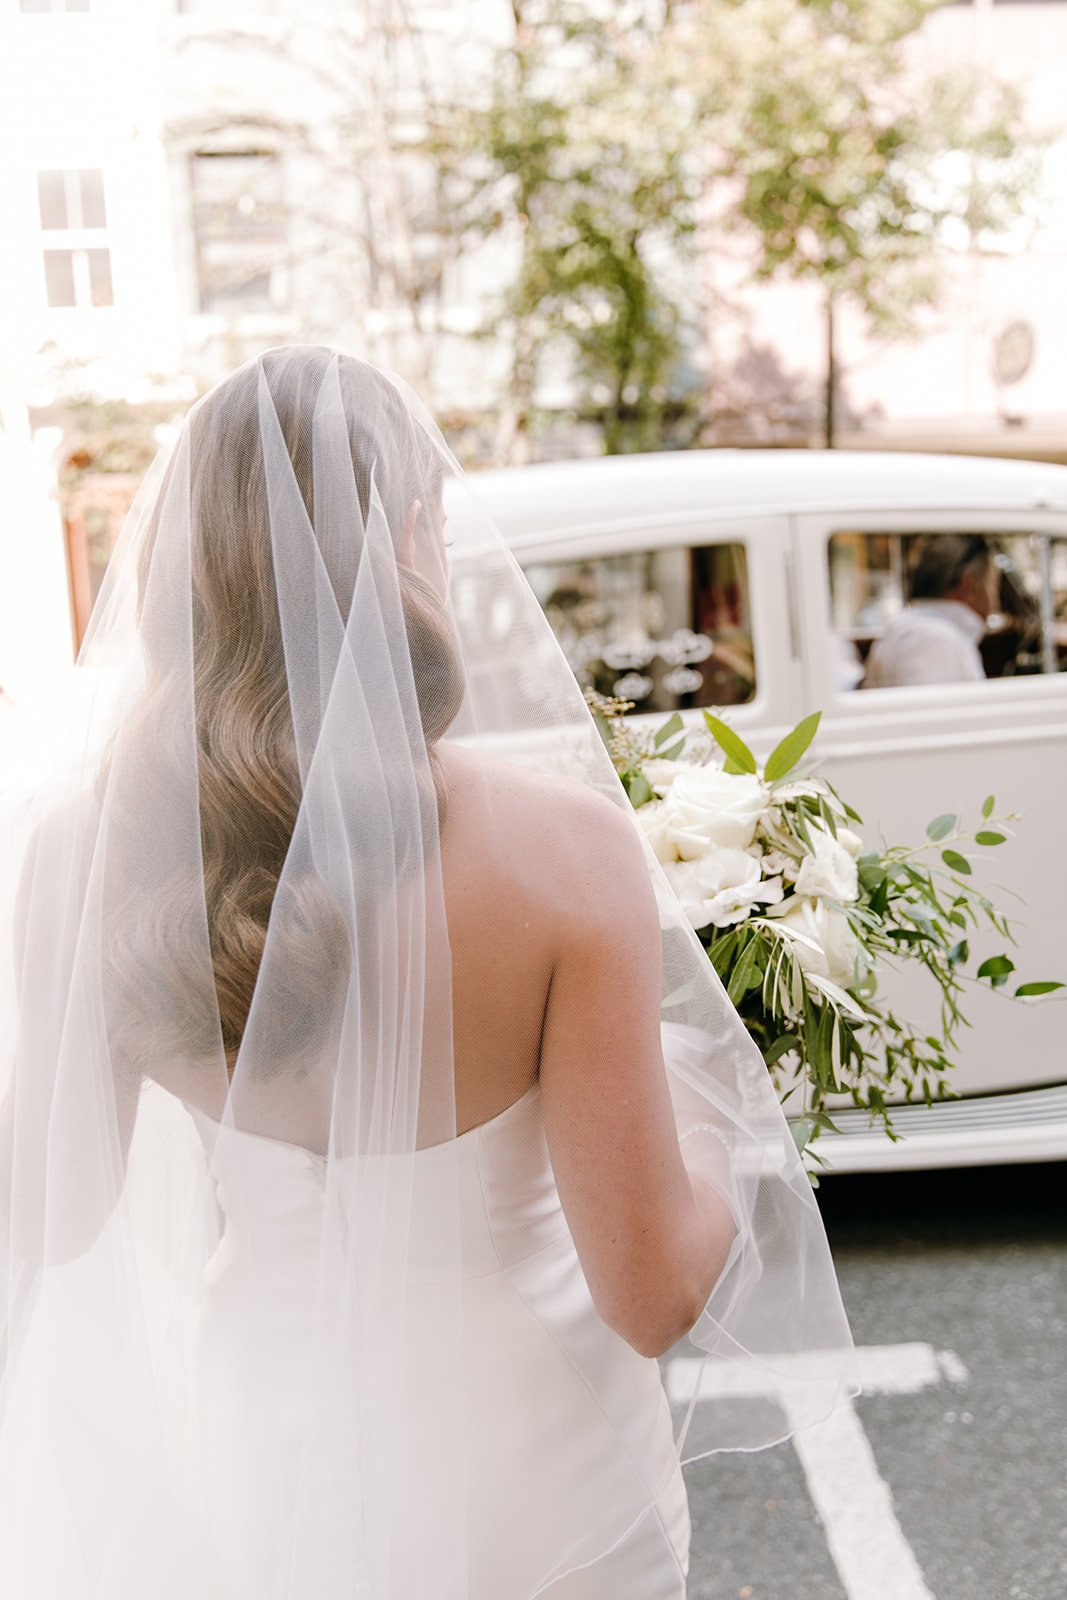 bride with veil walking to vintage car